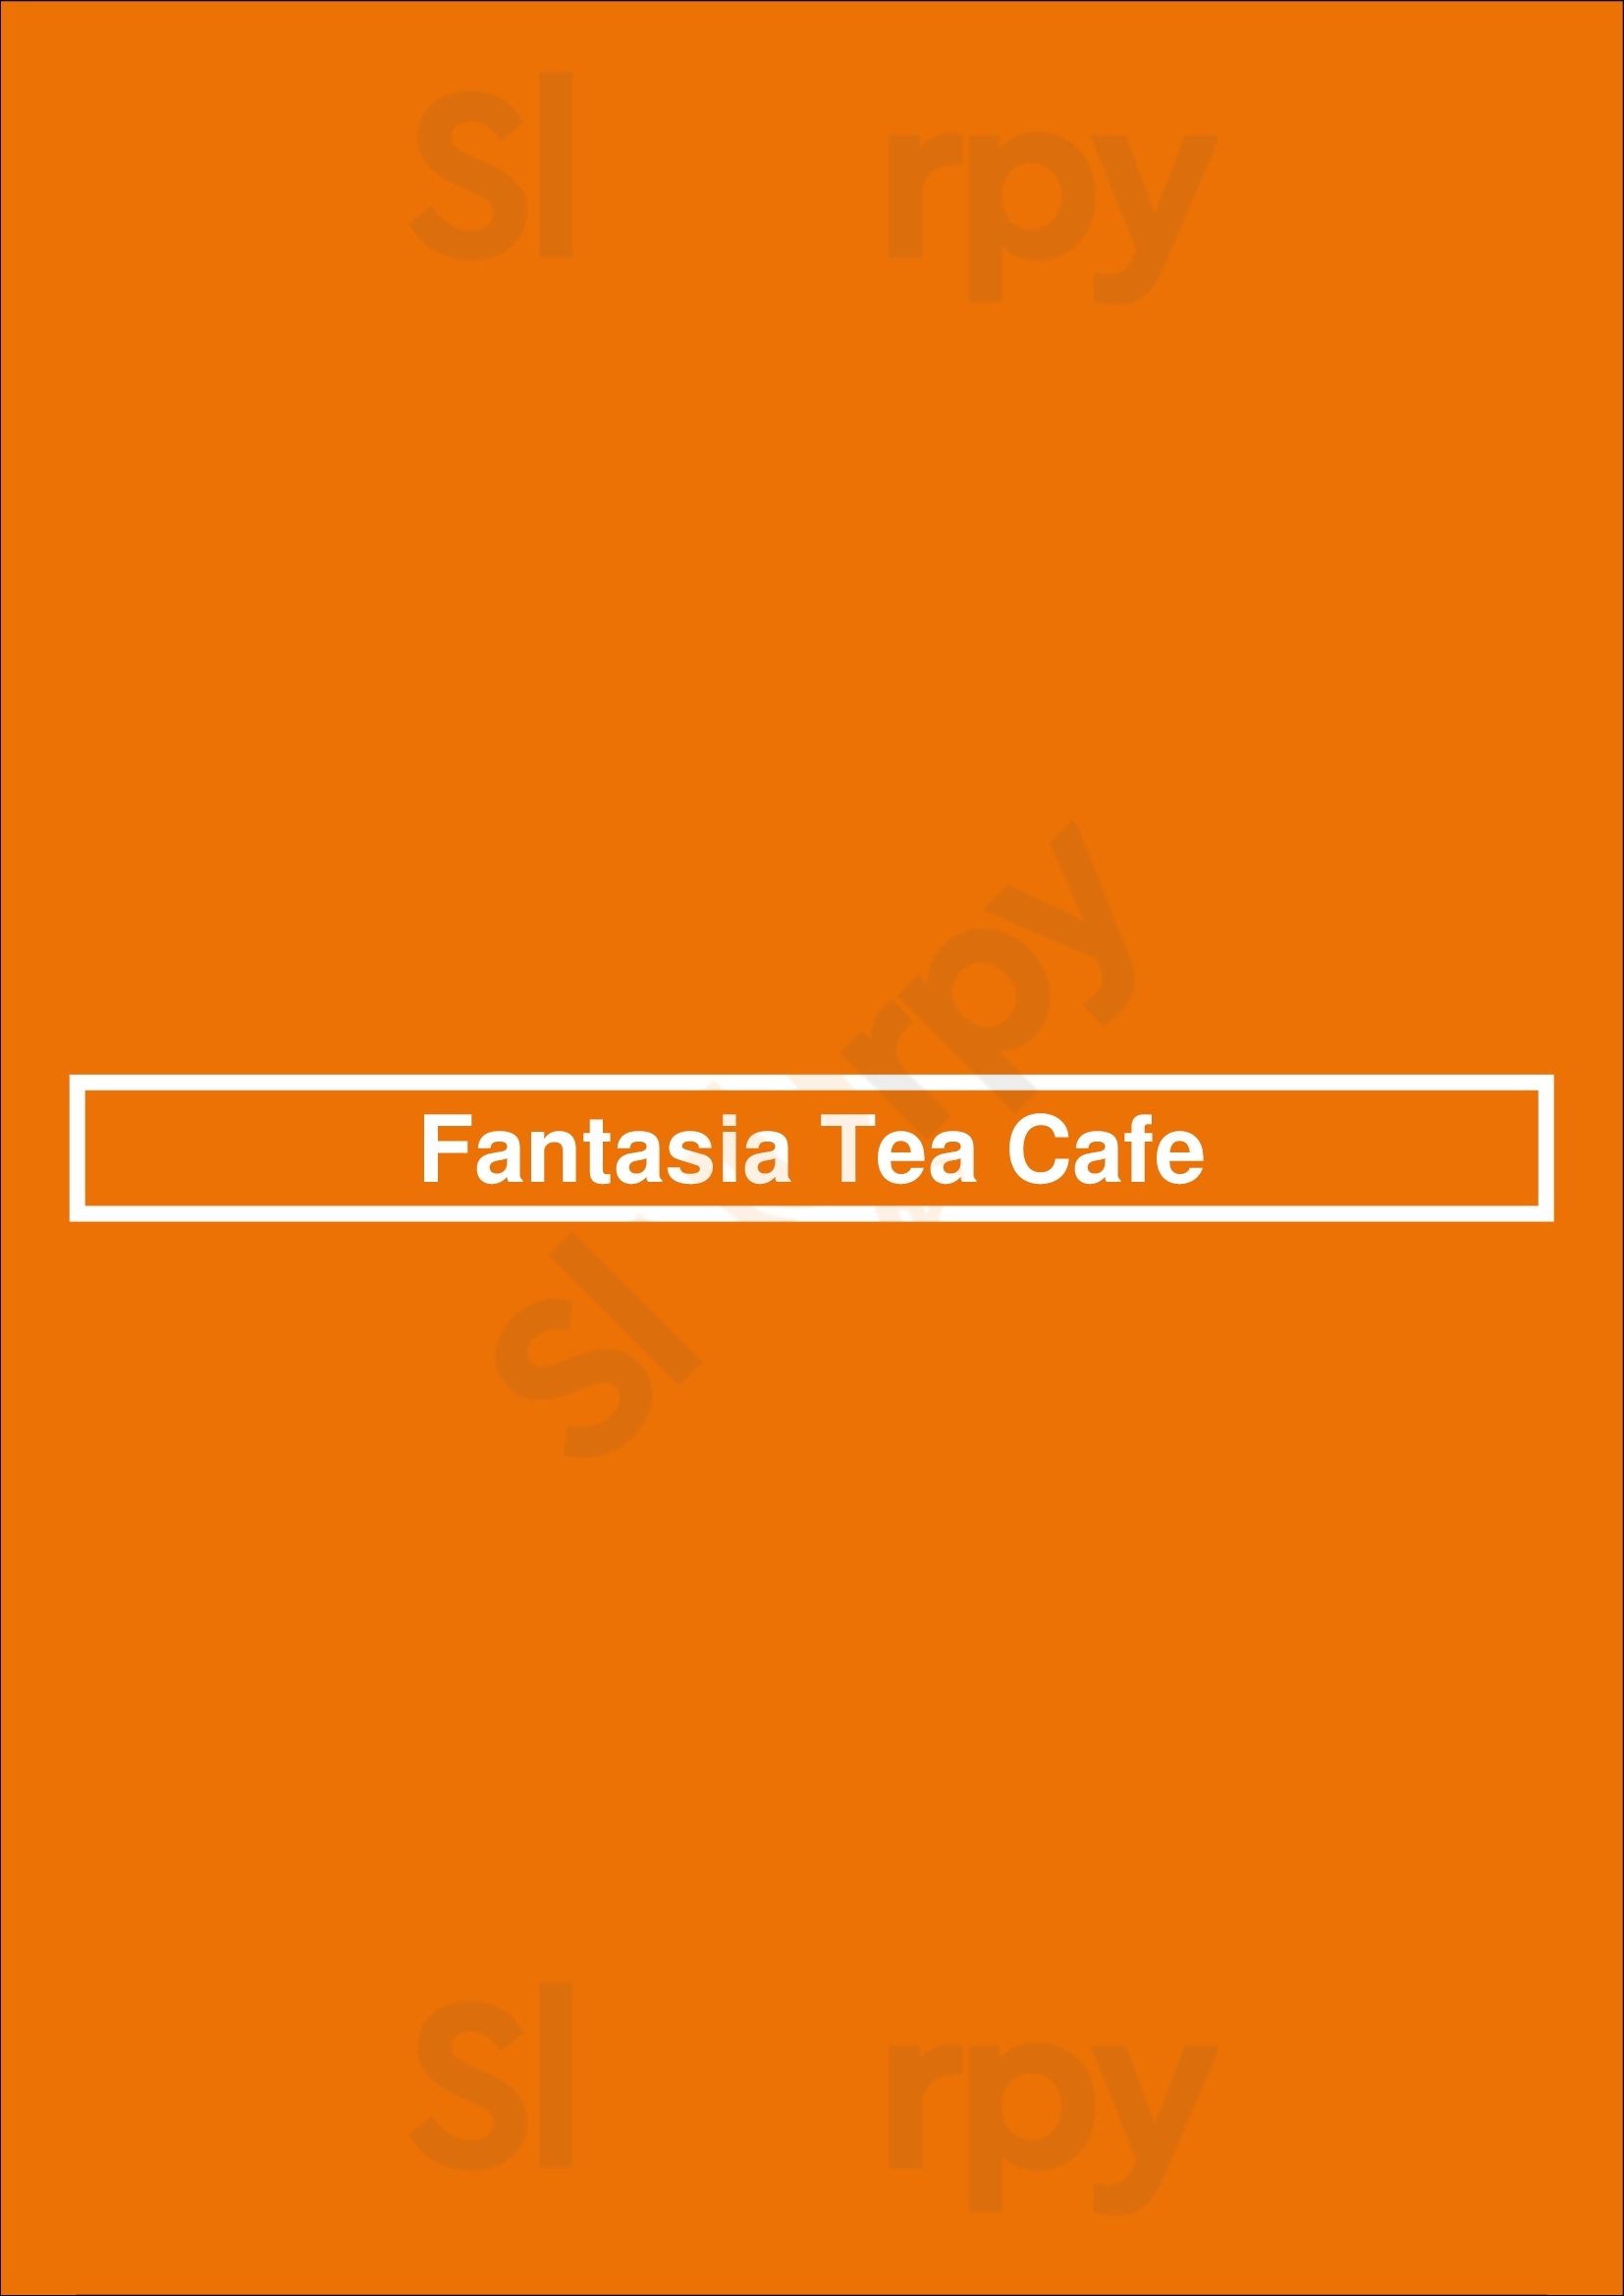 Fantasia Tea Cafe San Jose Menu - 1